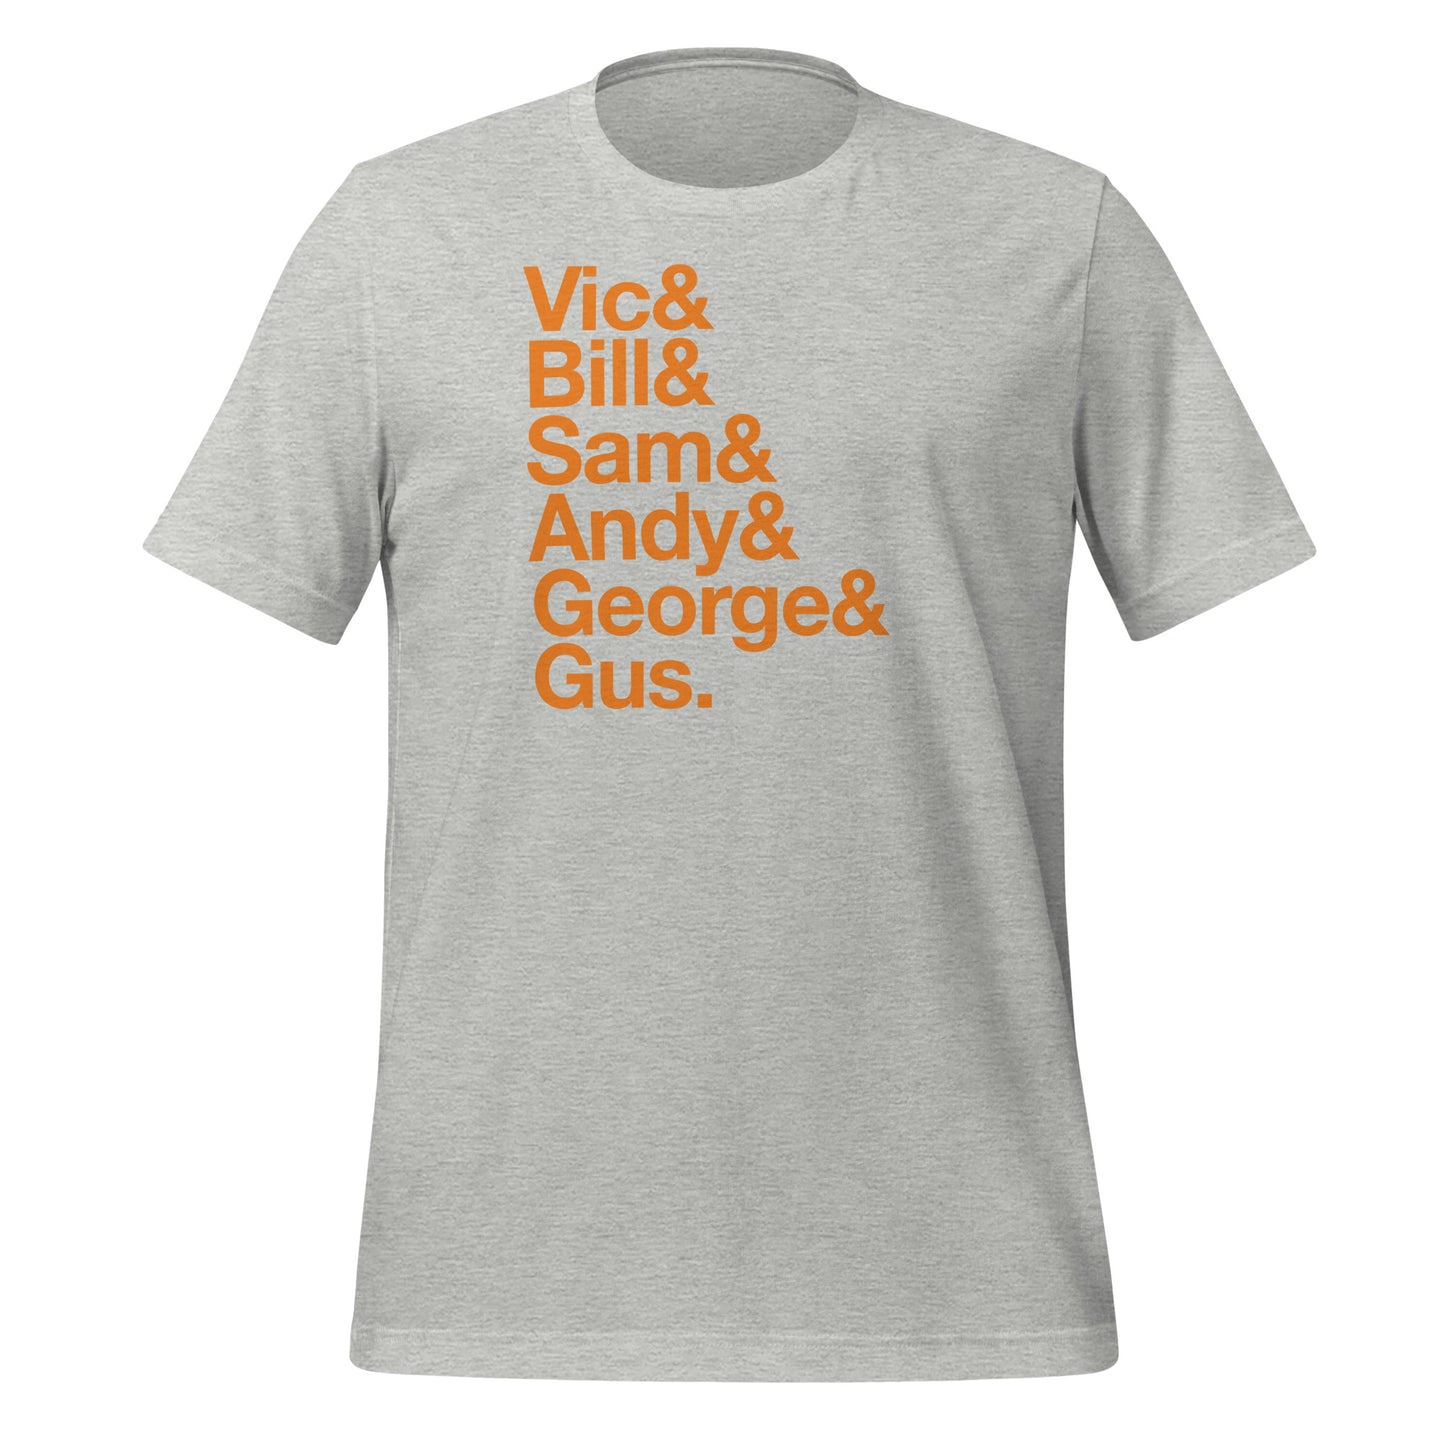 Vic&Bill&Sam&Andy&George&Gus unisex printed t-shirt